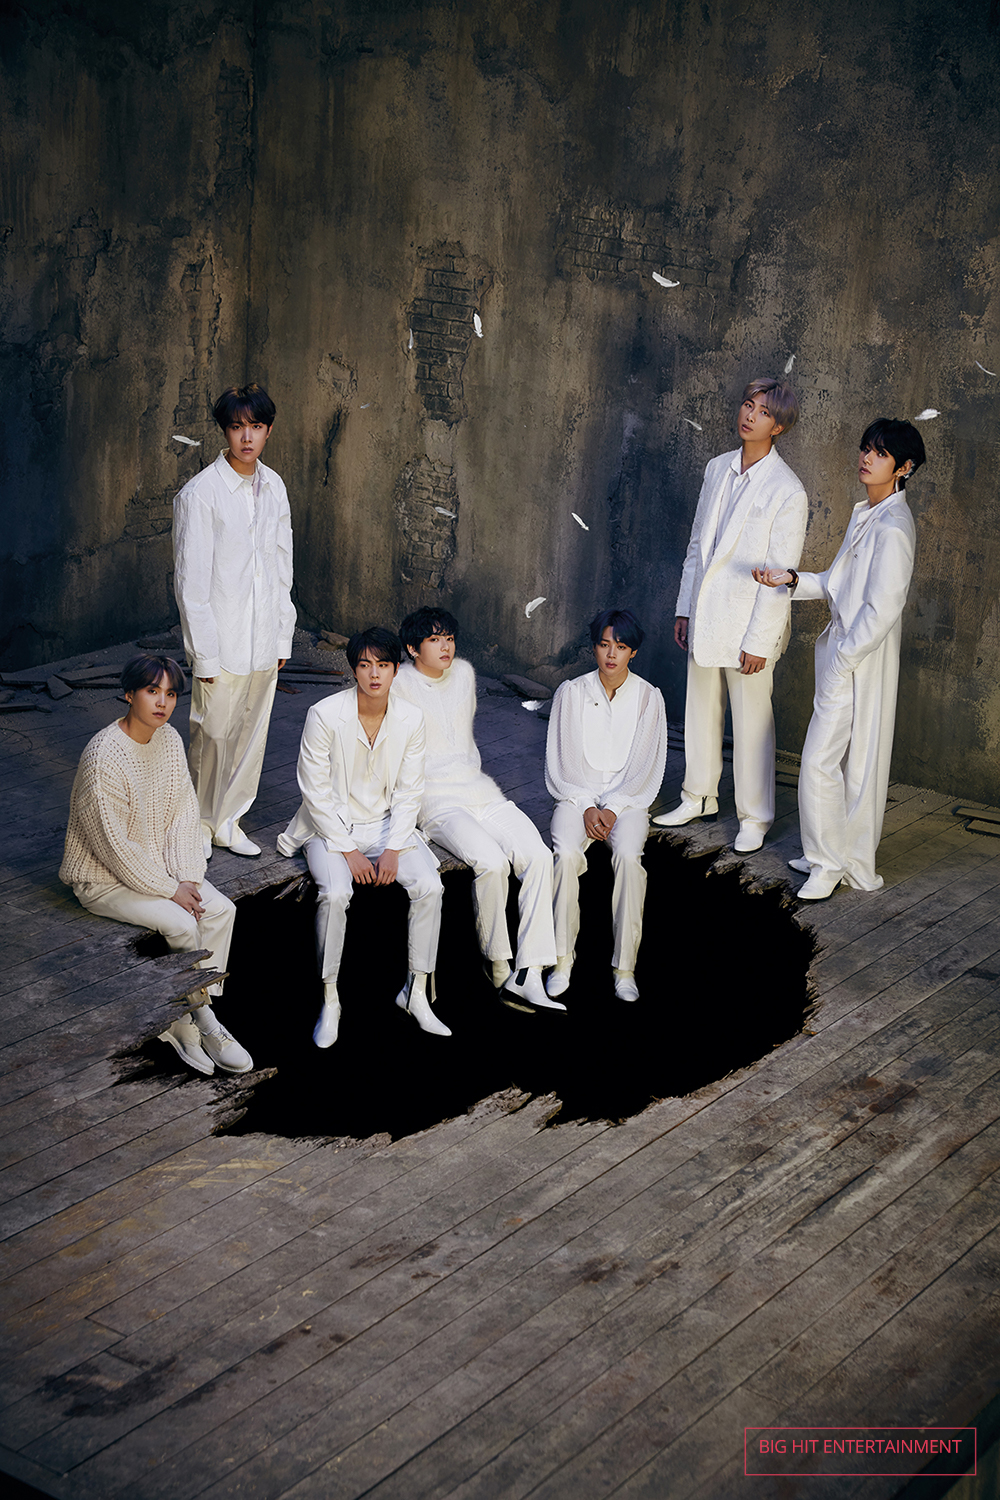 BTS-Map-of-the-soul-white-suit-credit-big-hit-entertainment